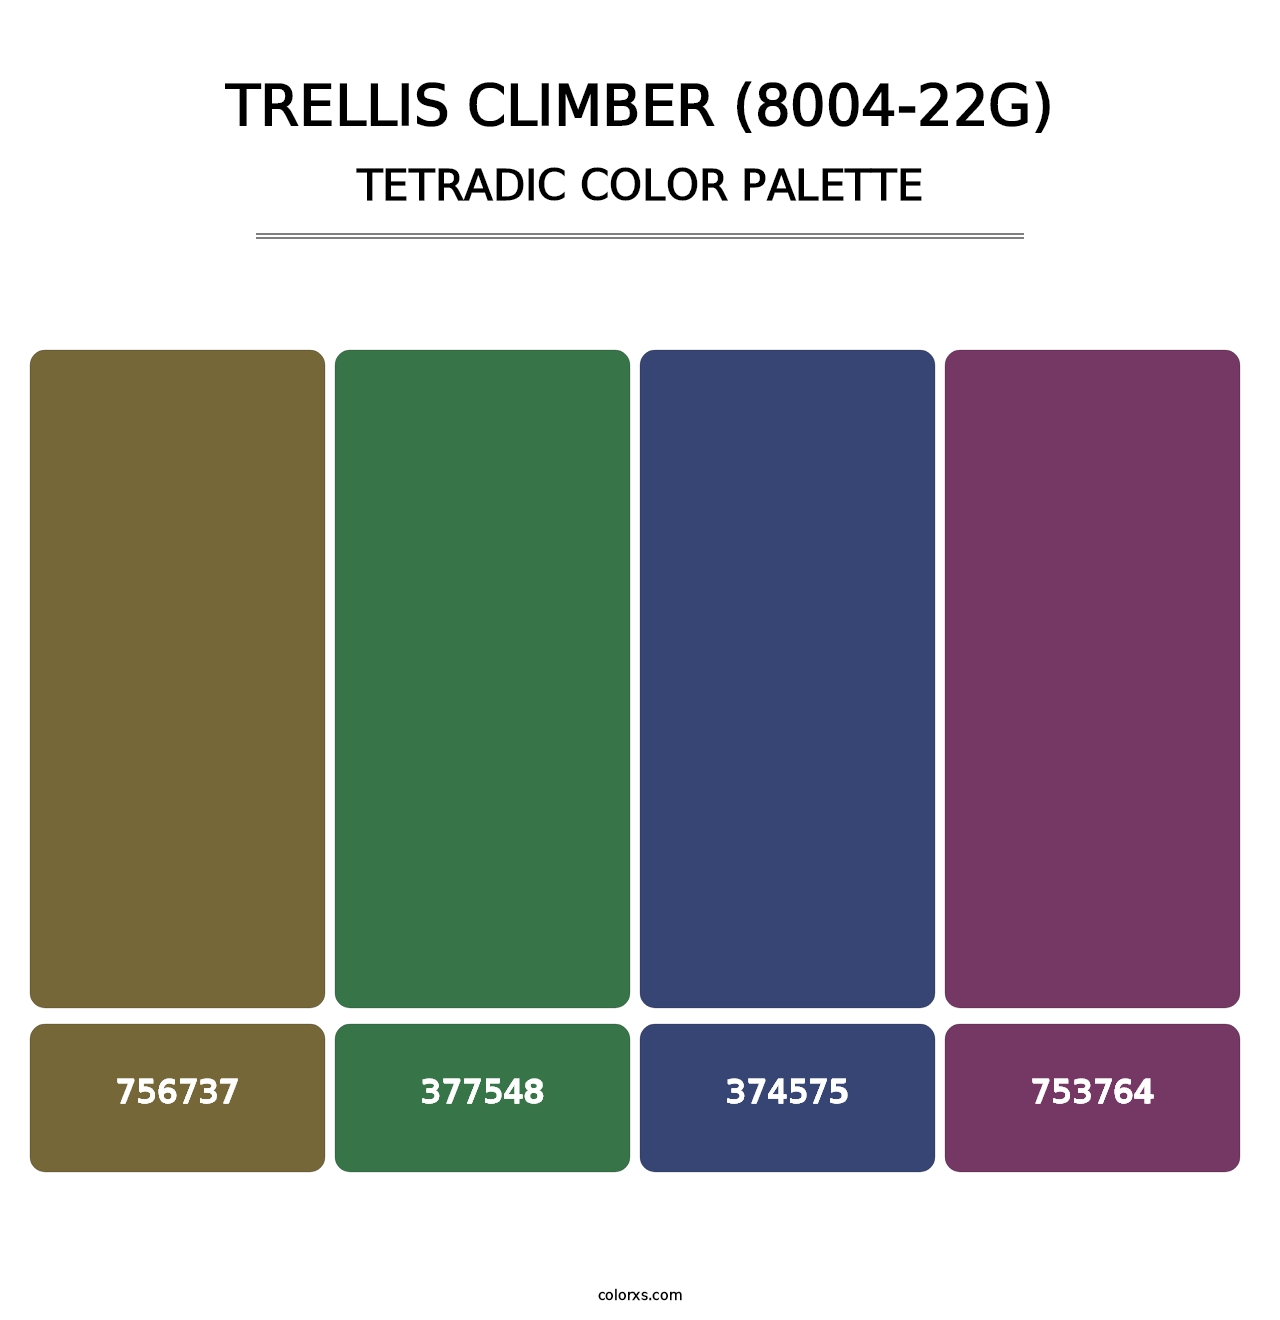 Trellis Climber (8004-22G) - Tetradic Color Palette